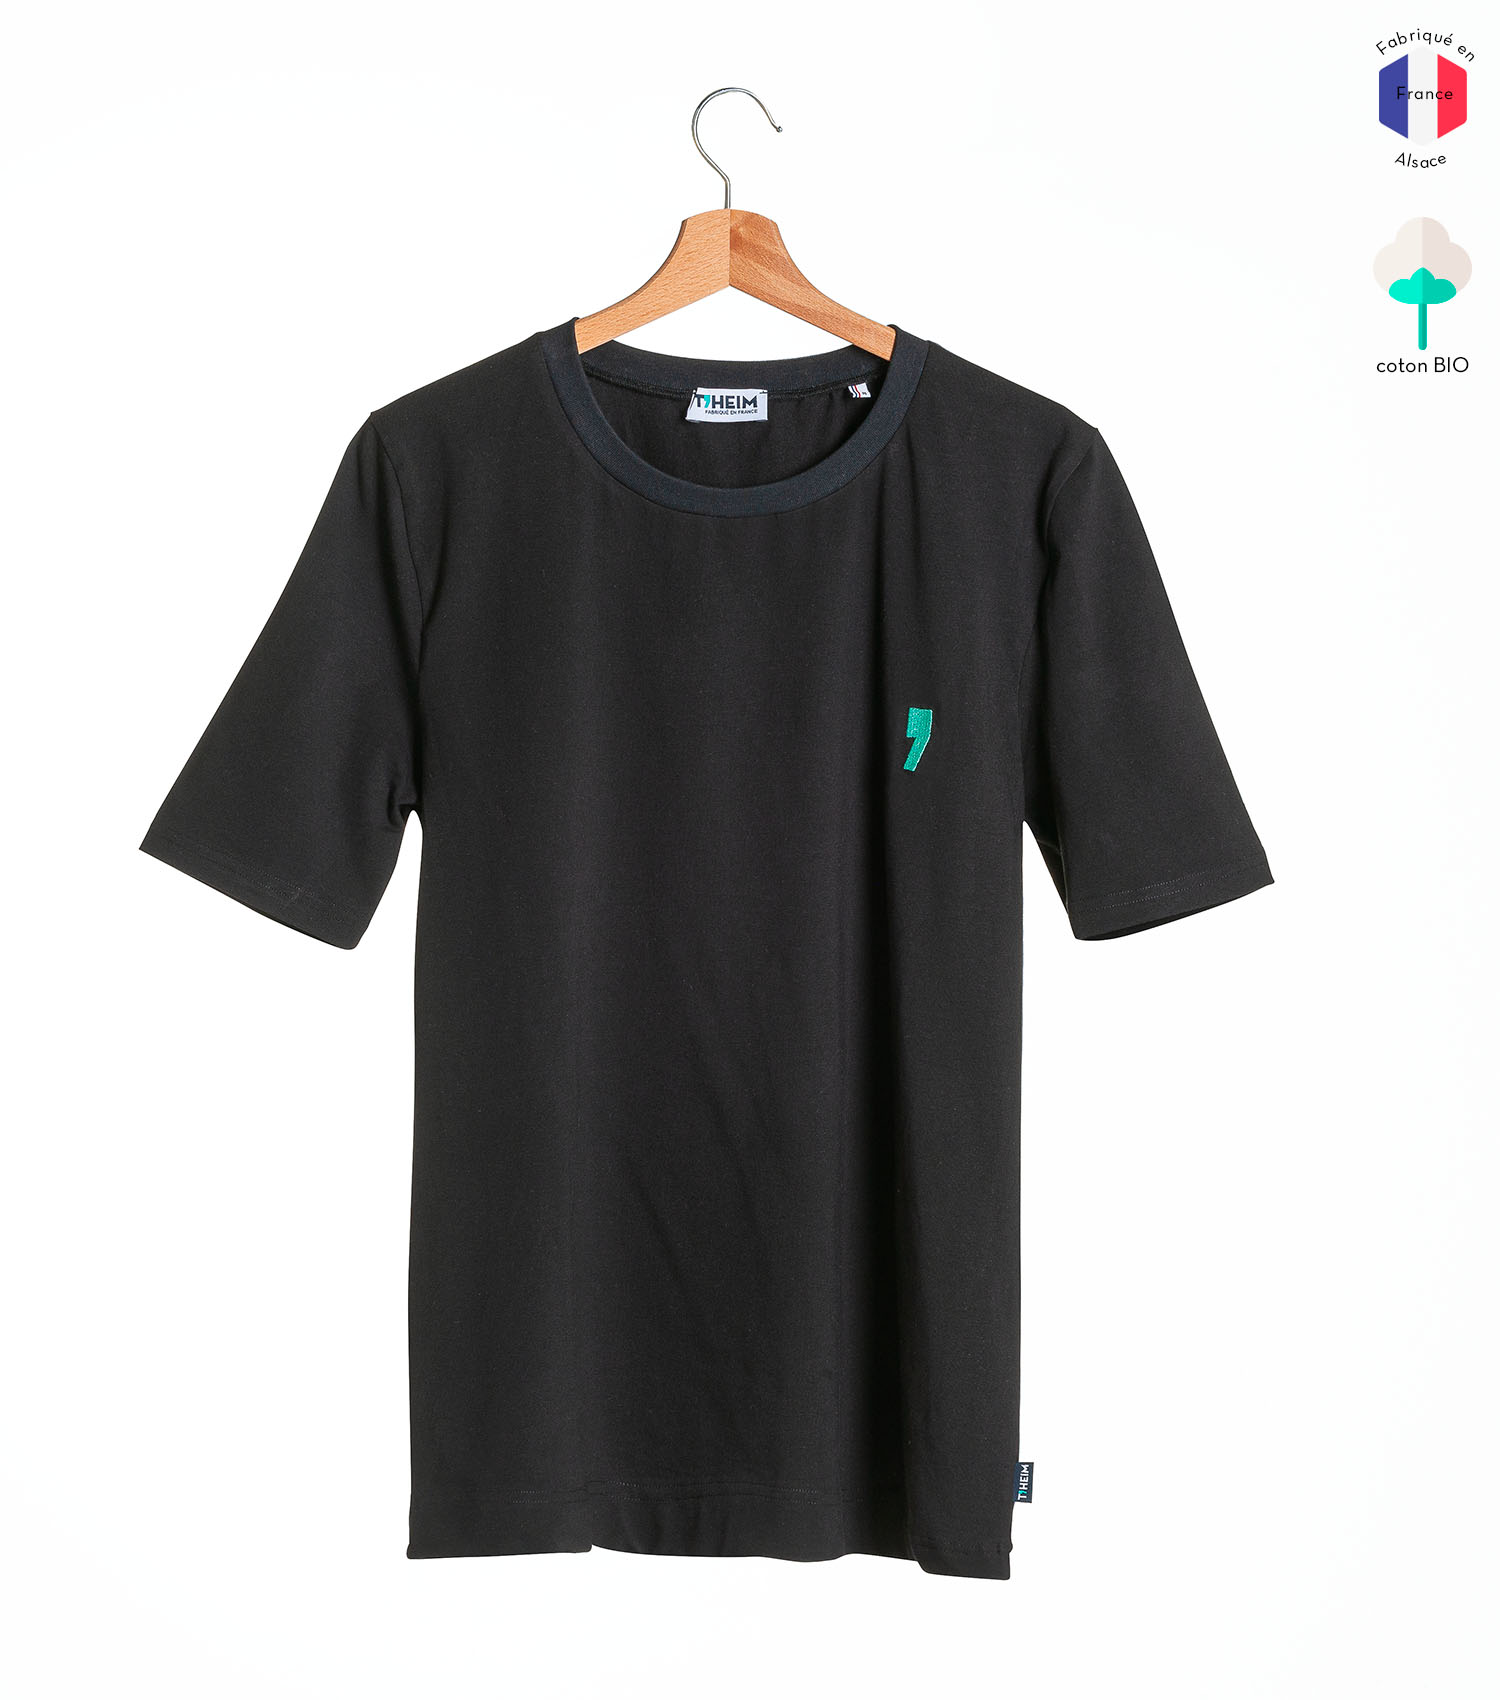 theim-tshirt-mixte-noir-broderie-apostrophe-4-1500x1700